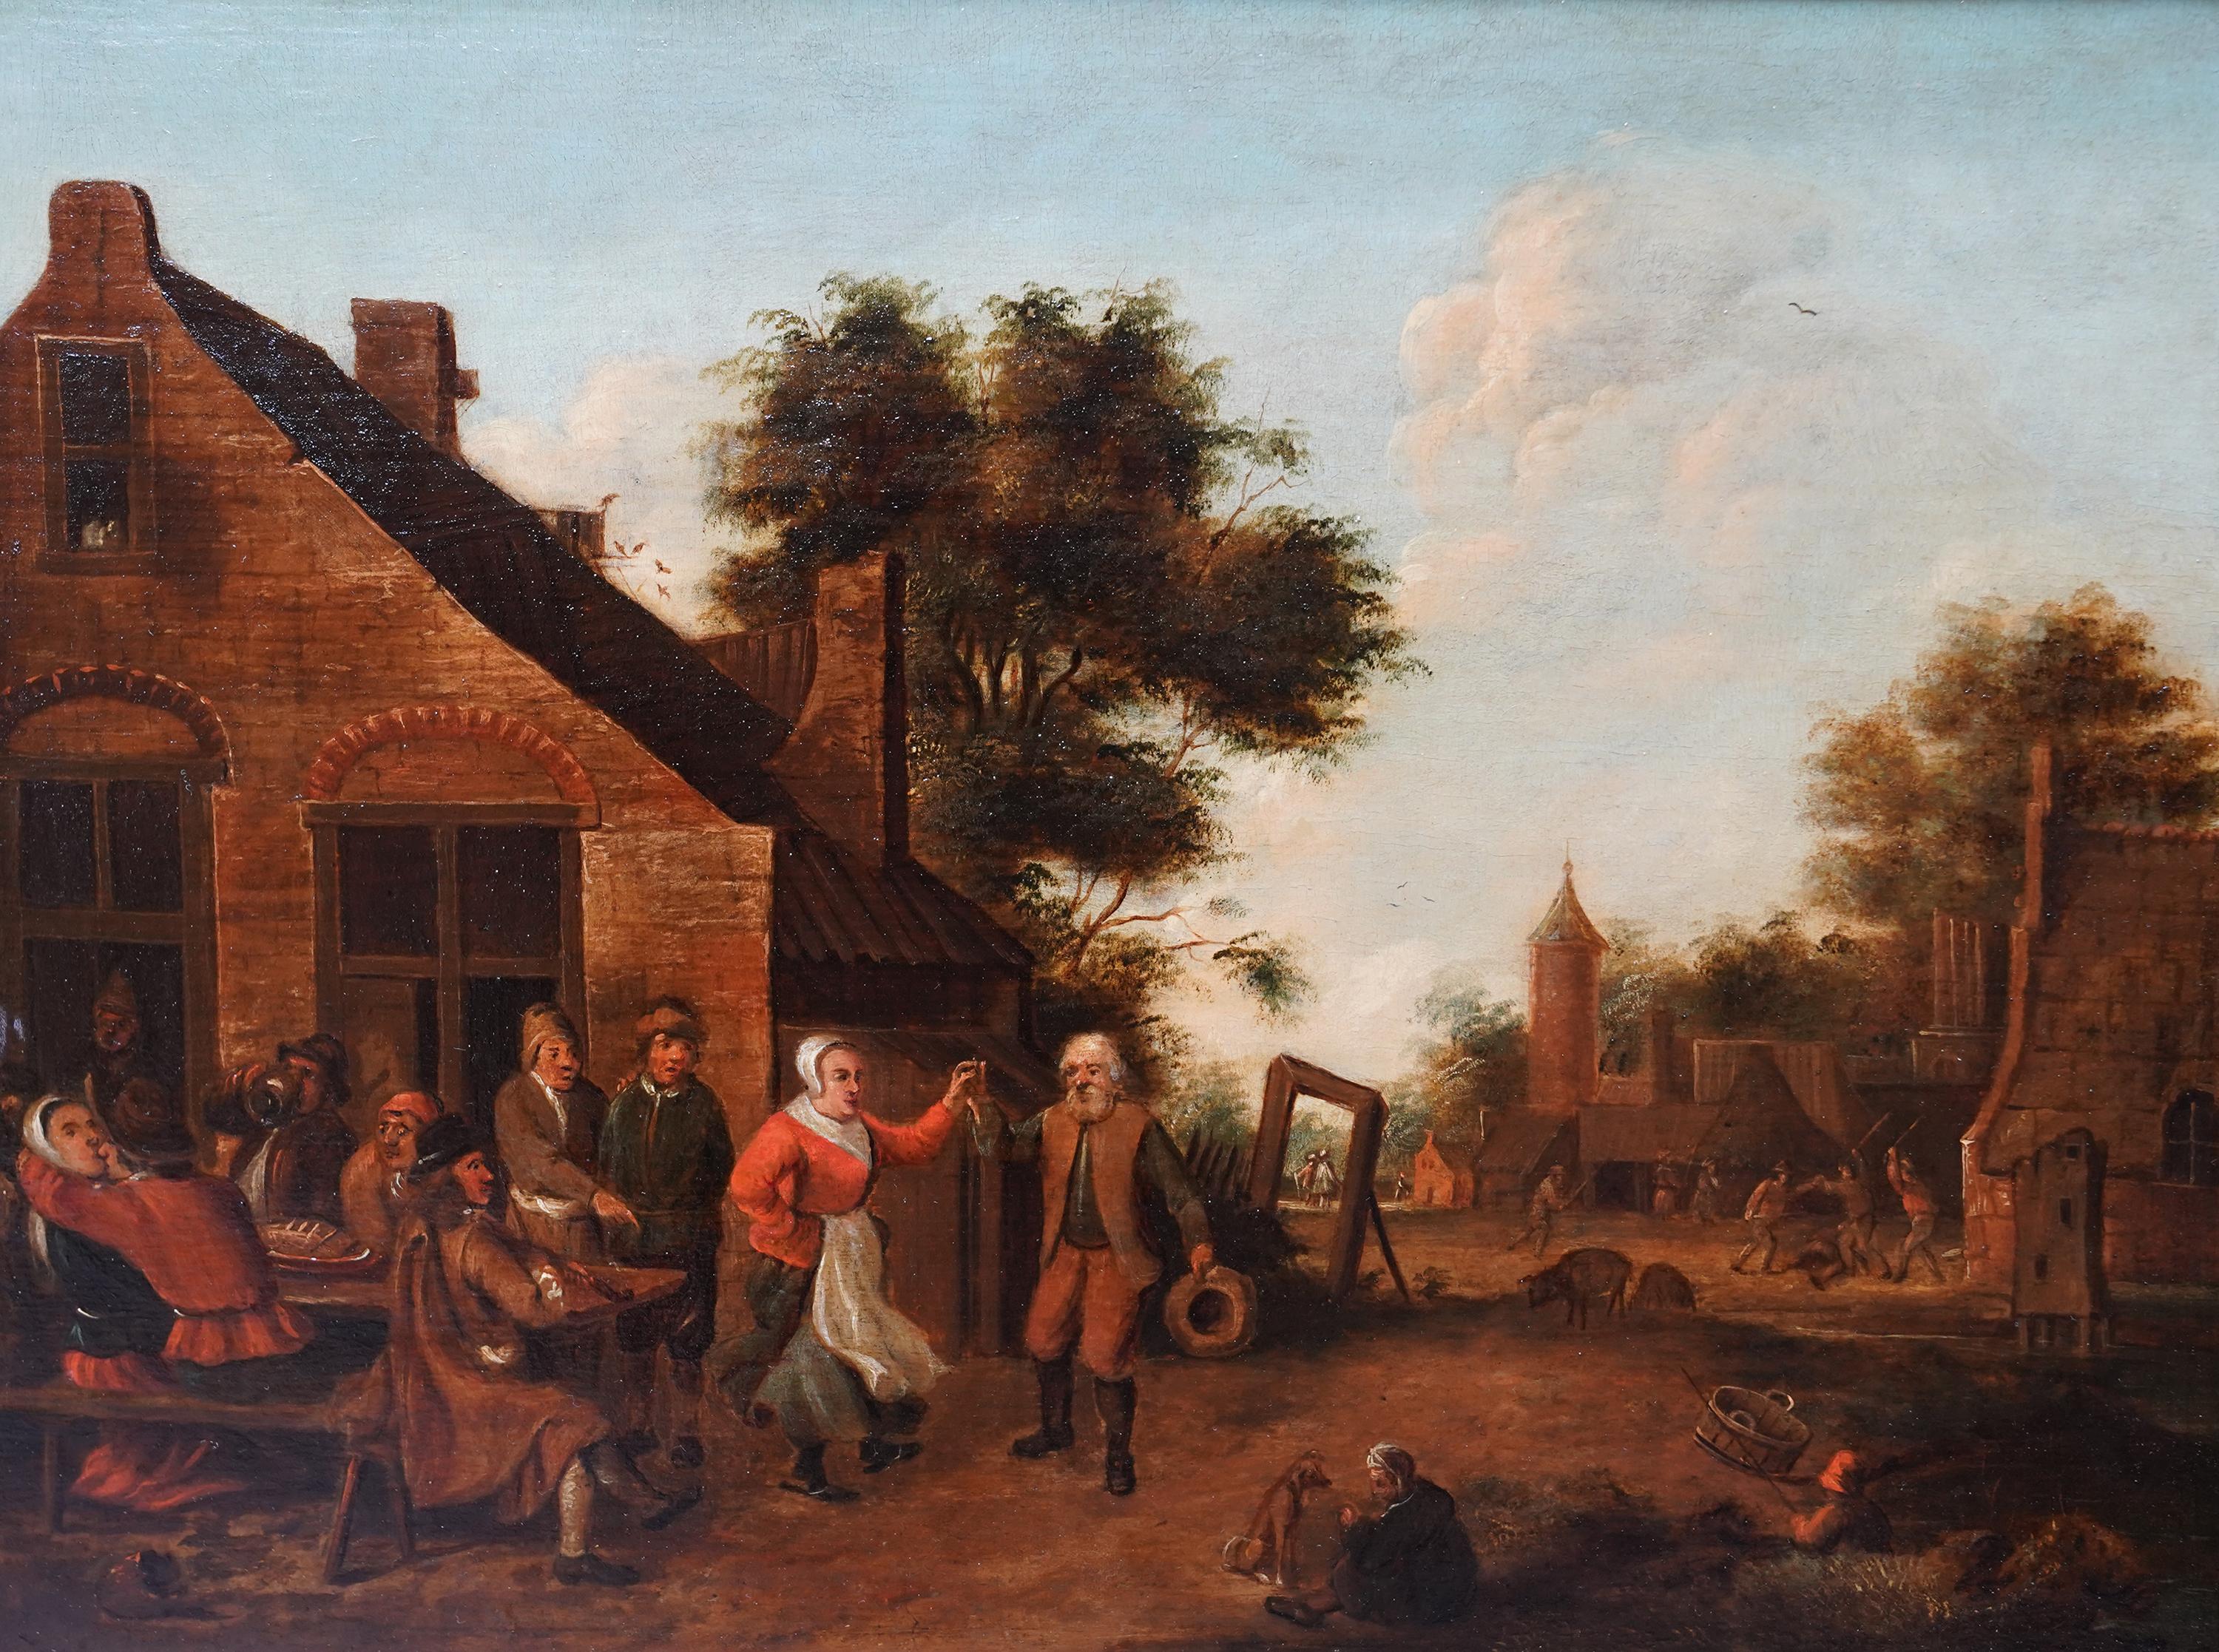 Villagers in a Landscape - Flemish 17thC art figurative landscape oil painting - Painting by Thomas van Apshoven